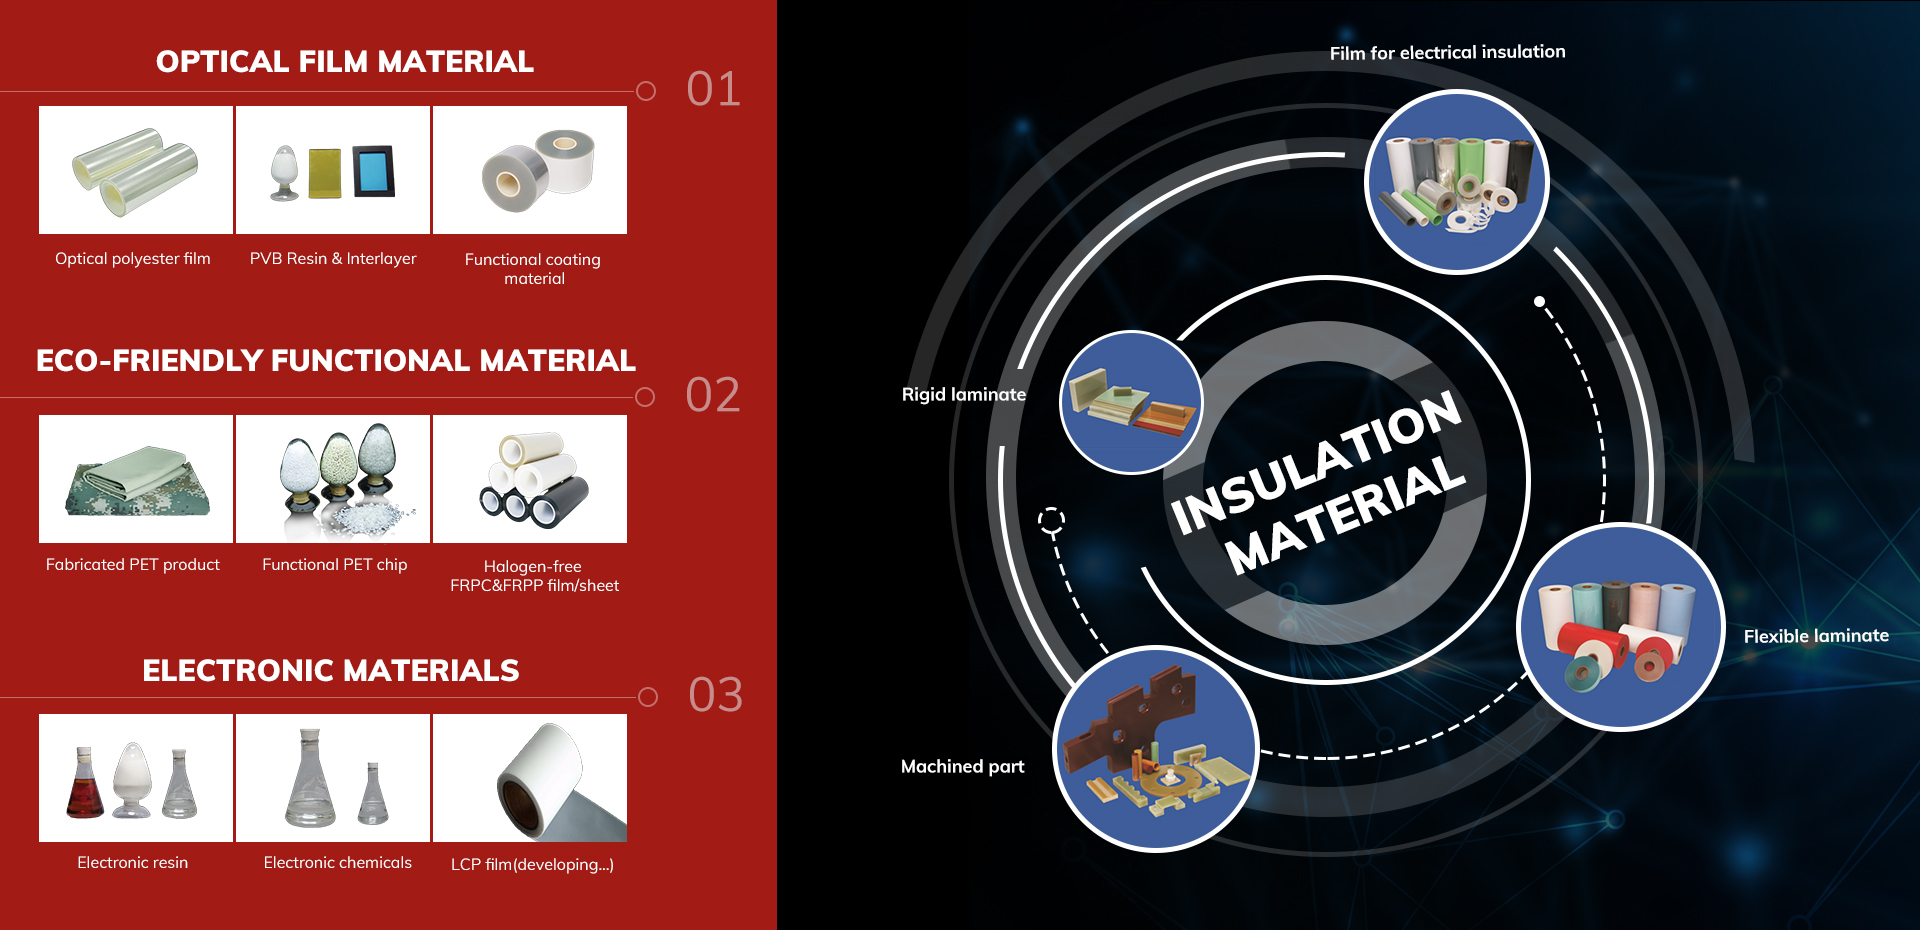 I-Insulation Material